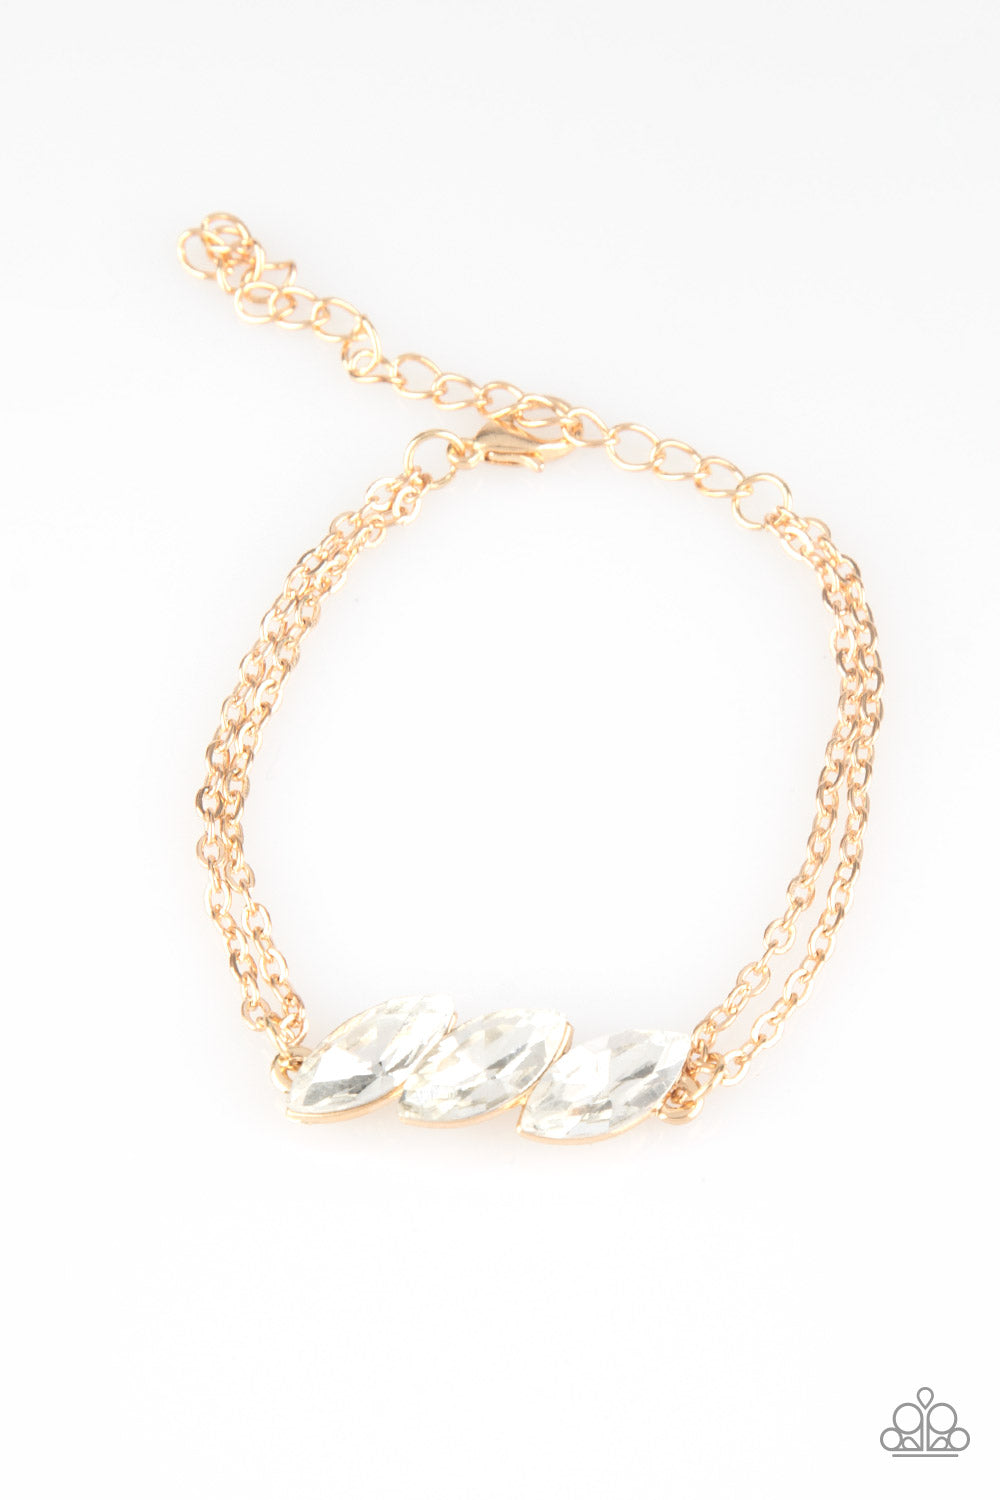 Pretty Priceless - Gold Bracelet - Princess Glam Shop